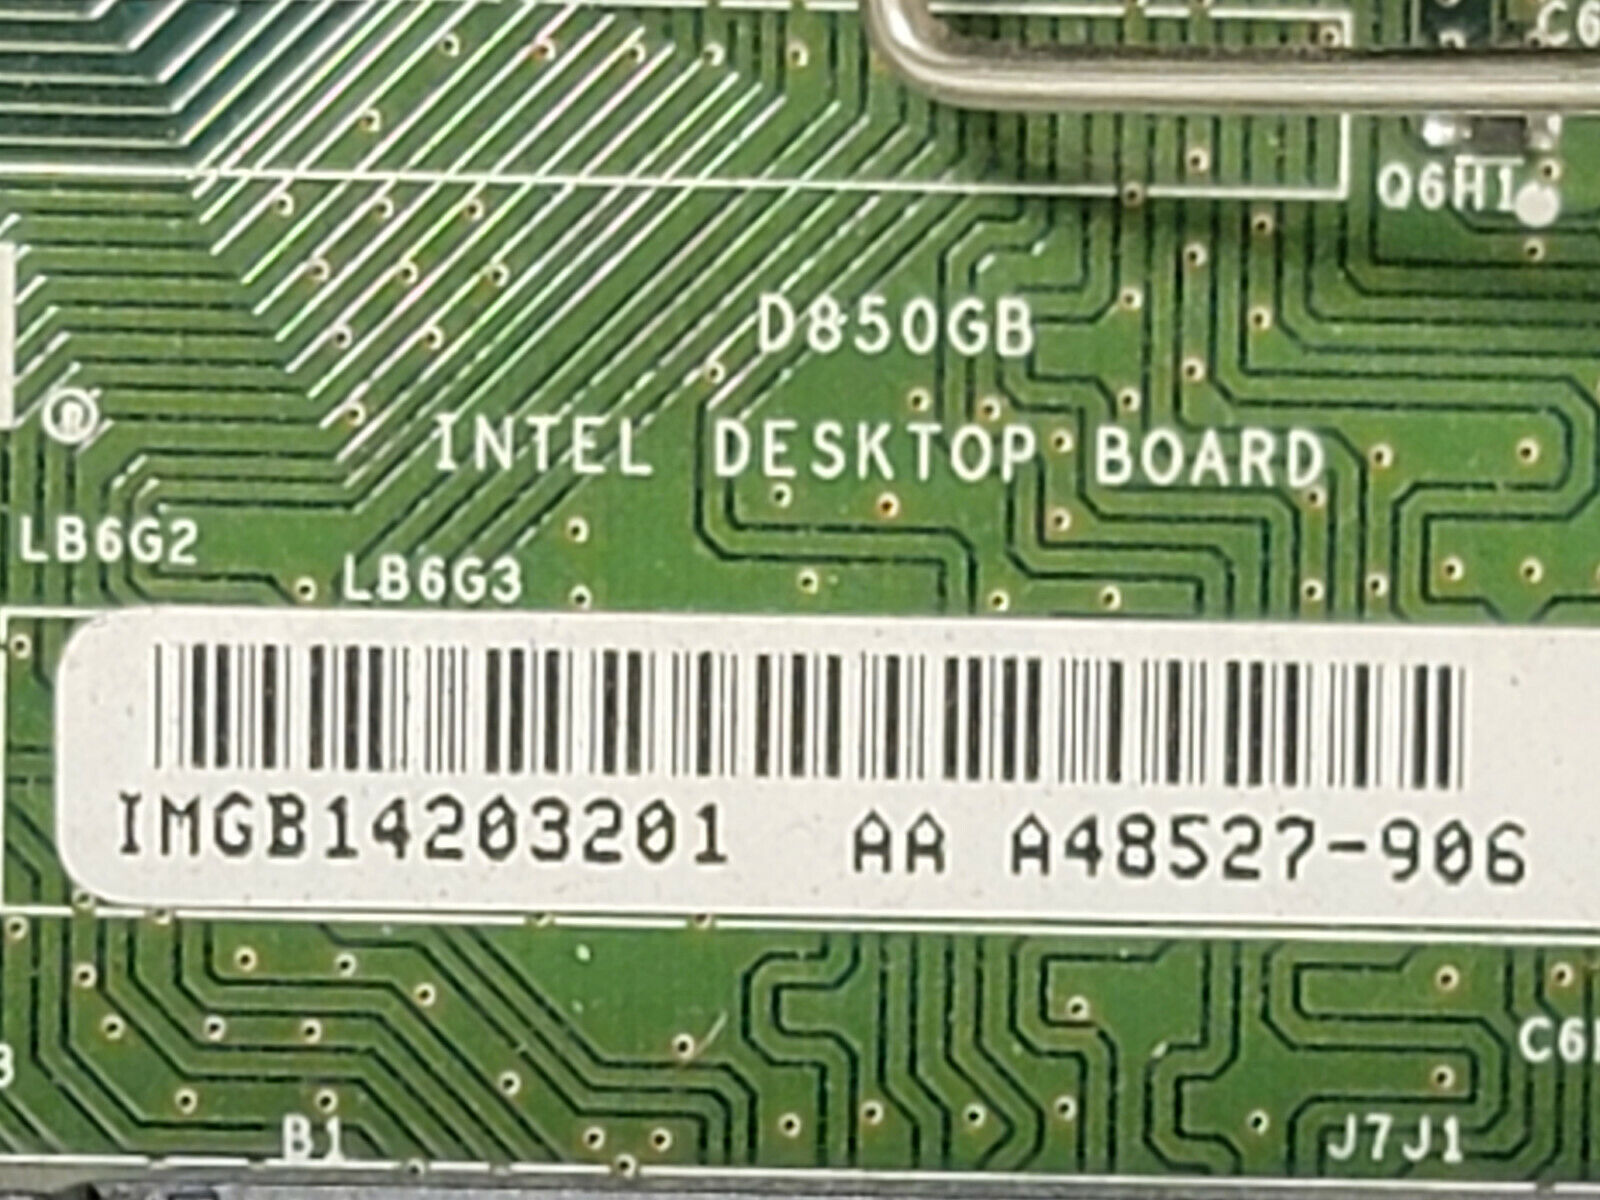 Intel D850GB Motherboard A48527-906 - i850 Chipset - 400 MHz FSB - AGP